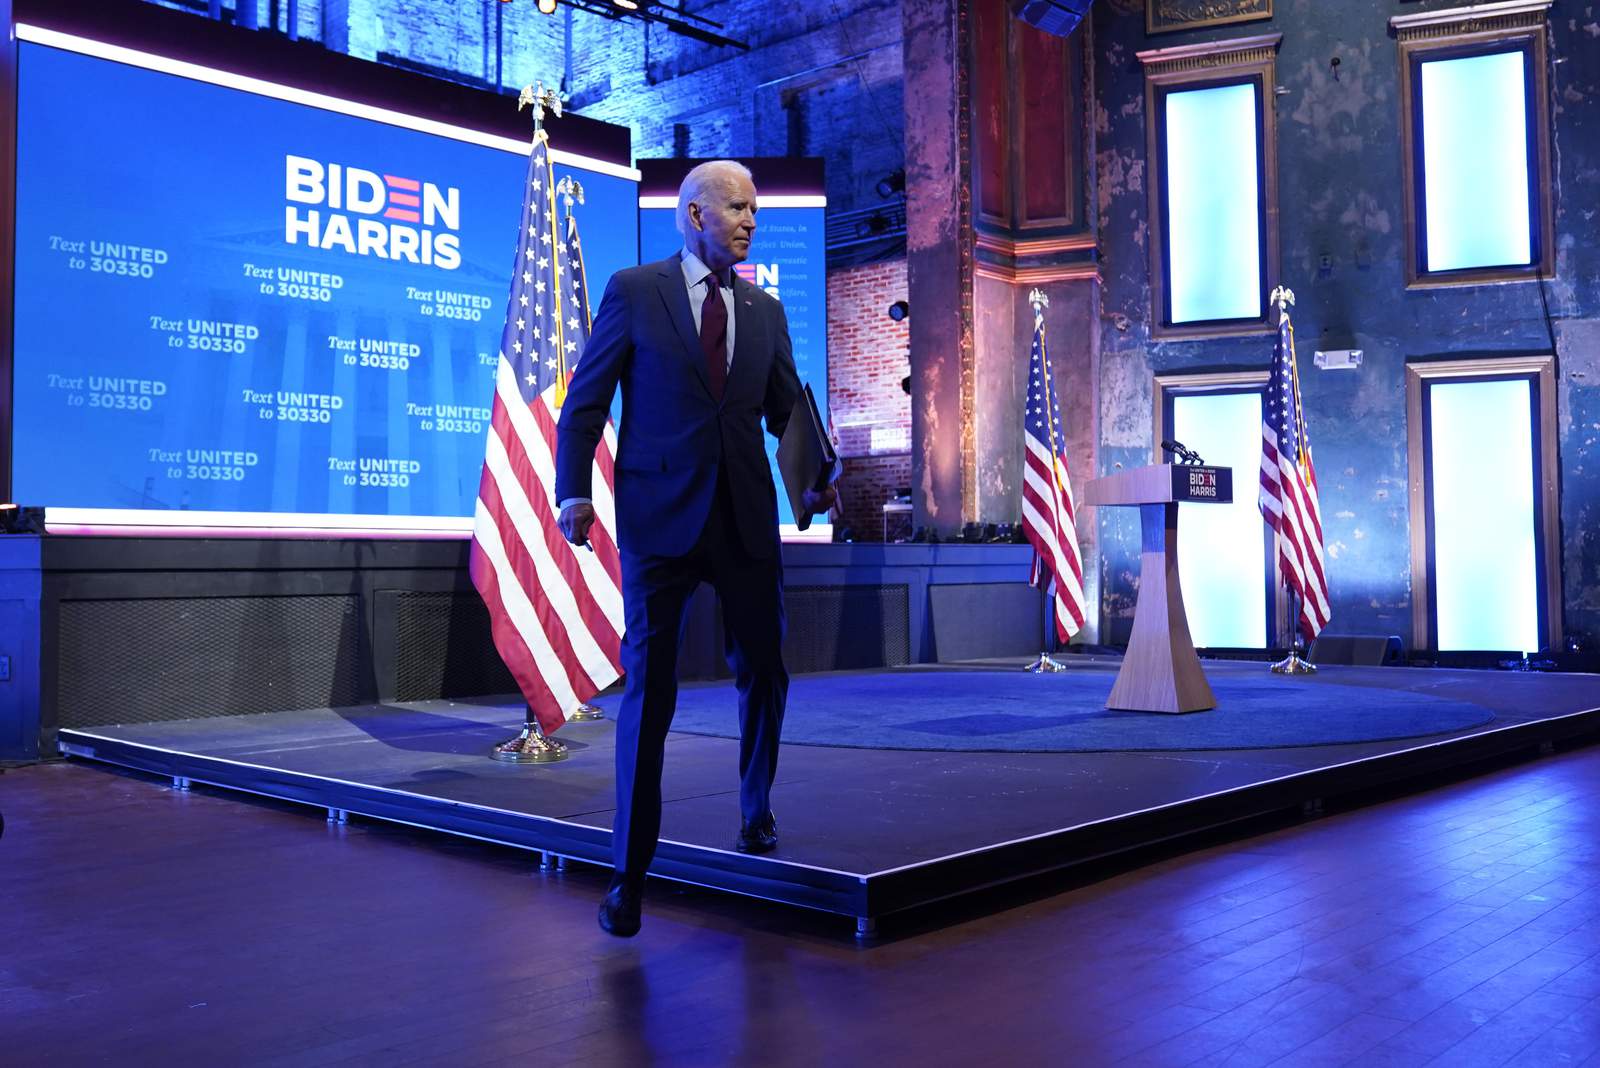 Biden releases 2019 tax returns before 1st debate with Trump